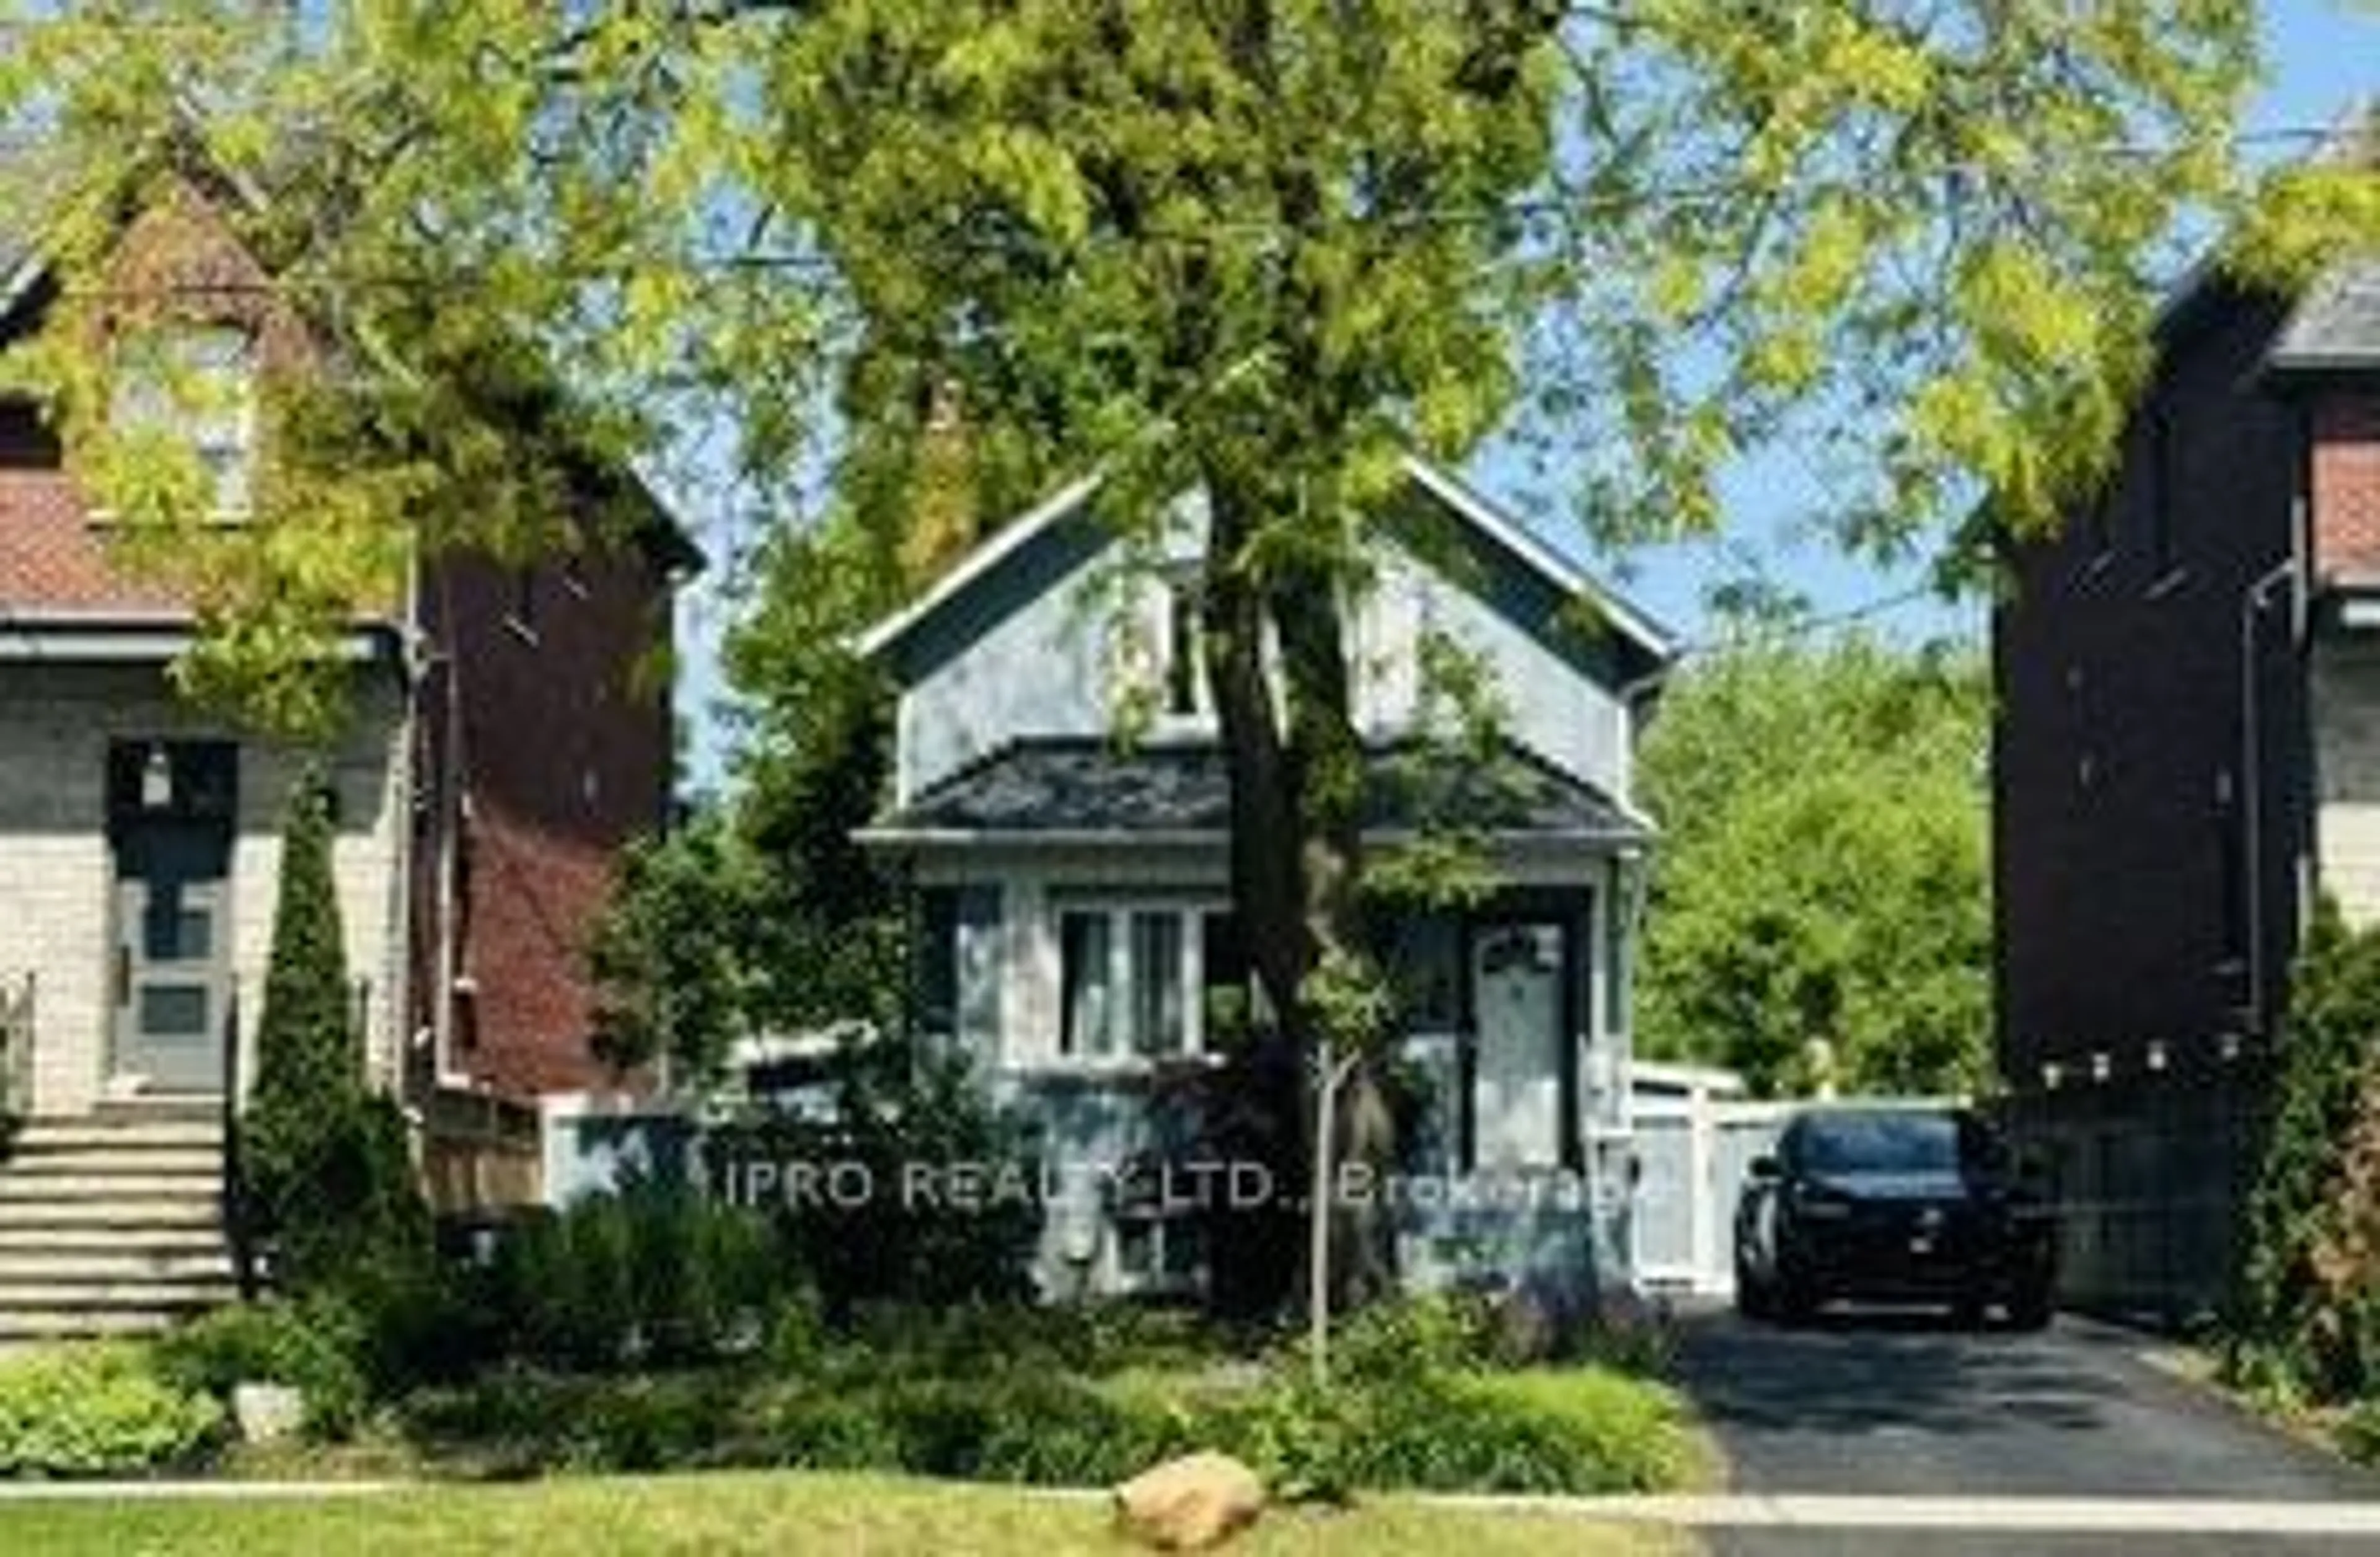 Home with brick exterior material for 1115 Islington Ave, Toronto Ontario M8Z 4S3